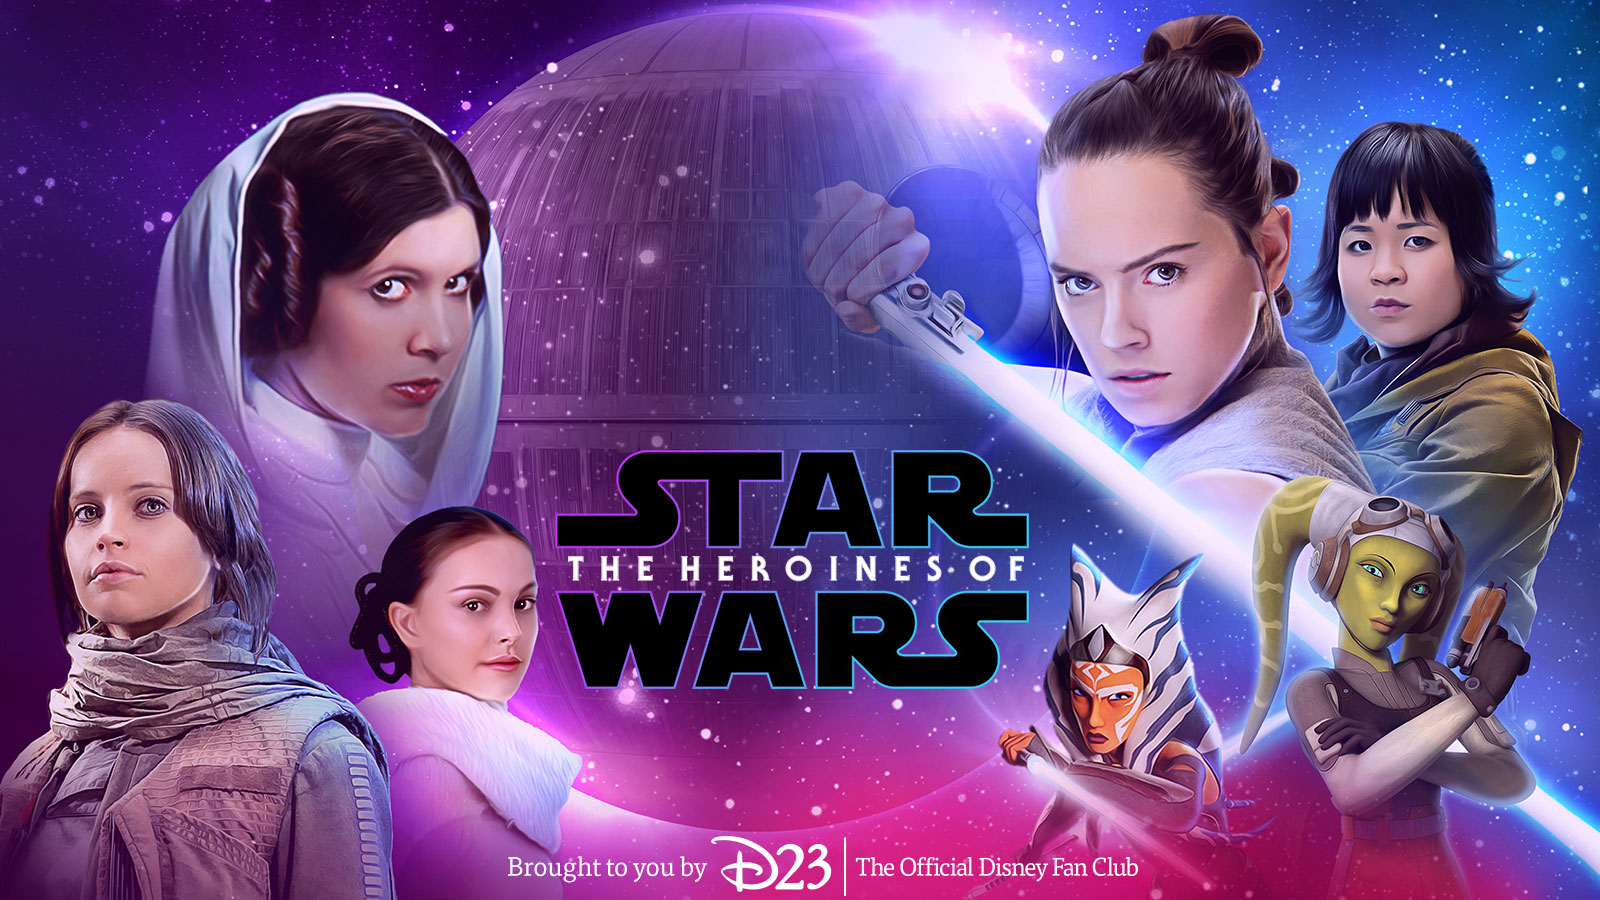 Star Wars Heroines Wallpapers for Your Desktop, Tablet or Phone - D23